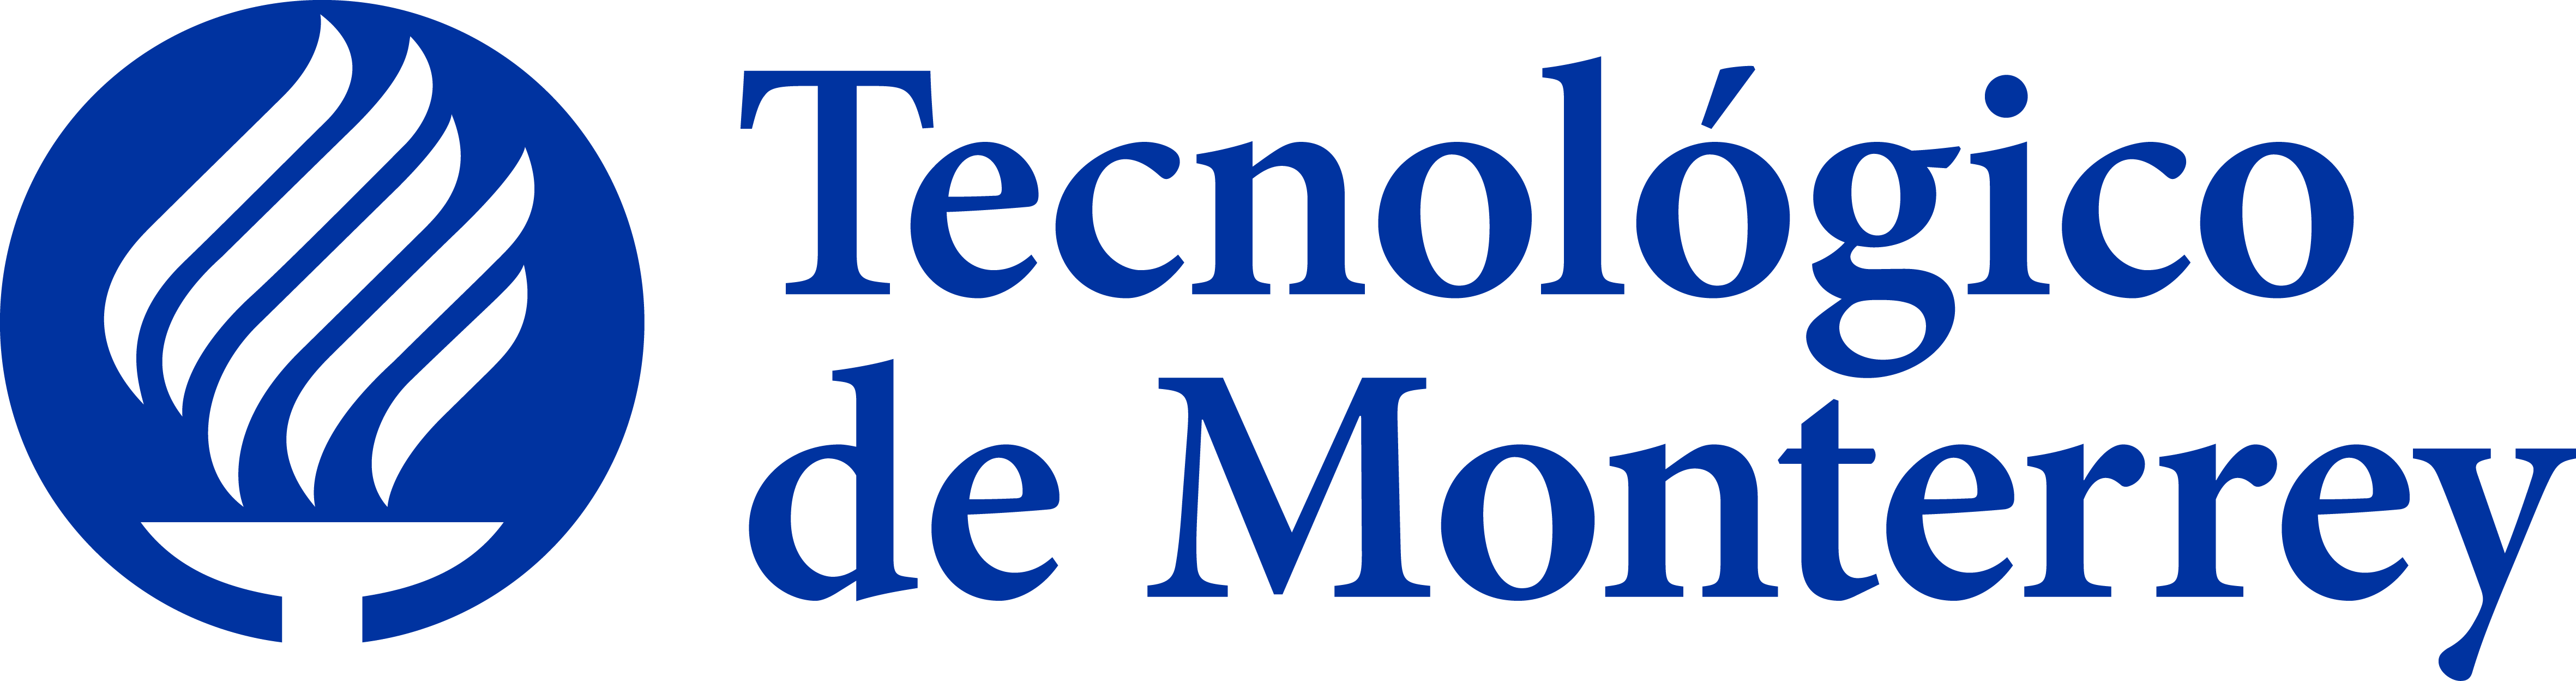 Tec-de-Monterrey-logo-horizontal-blue-2 (1)